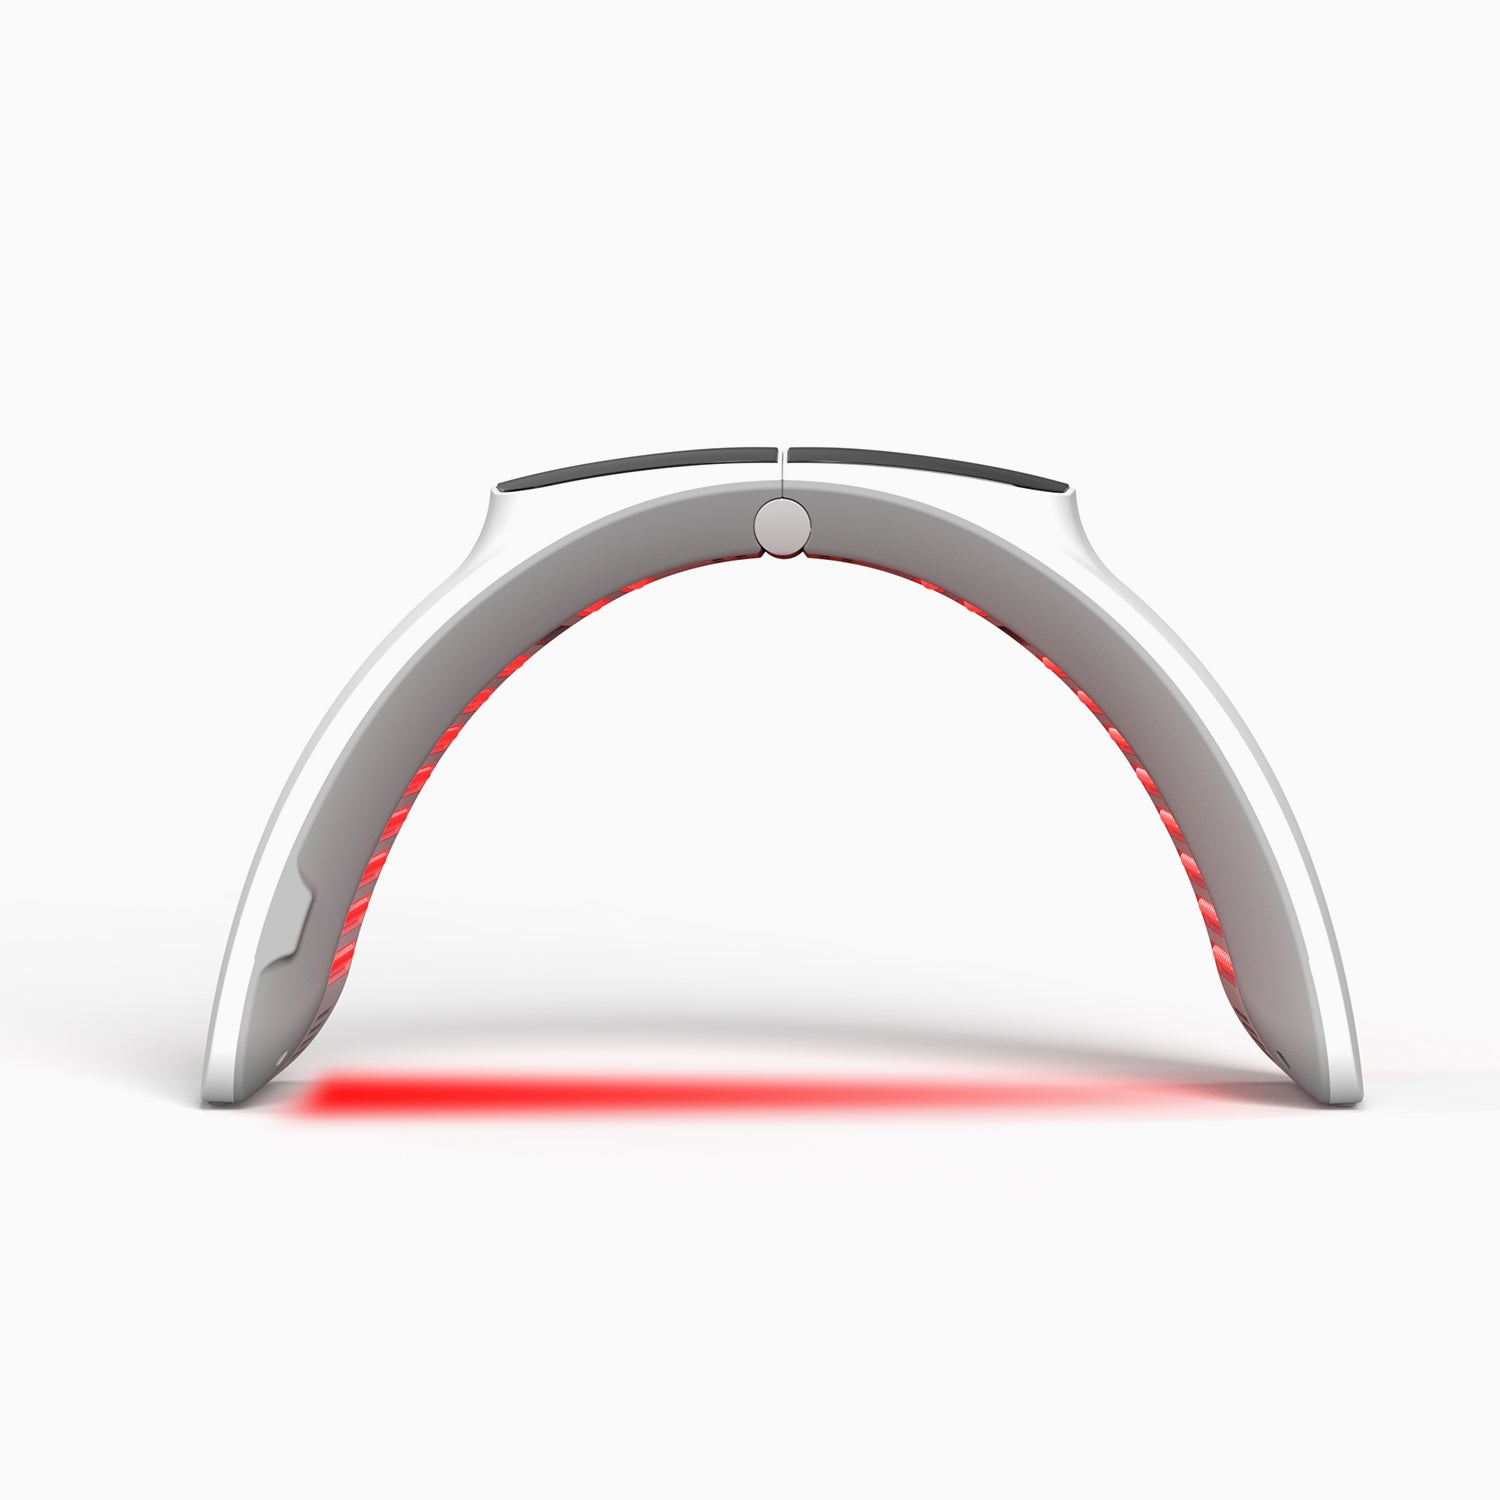 Swirise LED Light Therapy Device